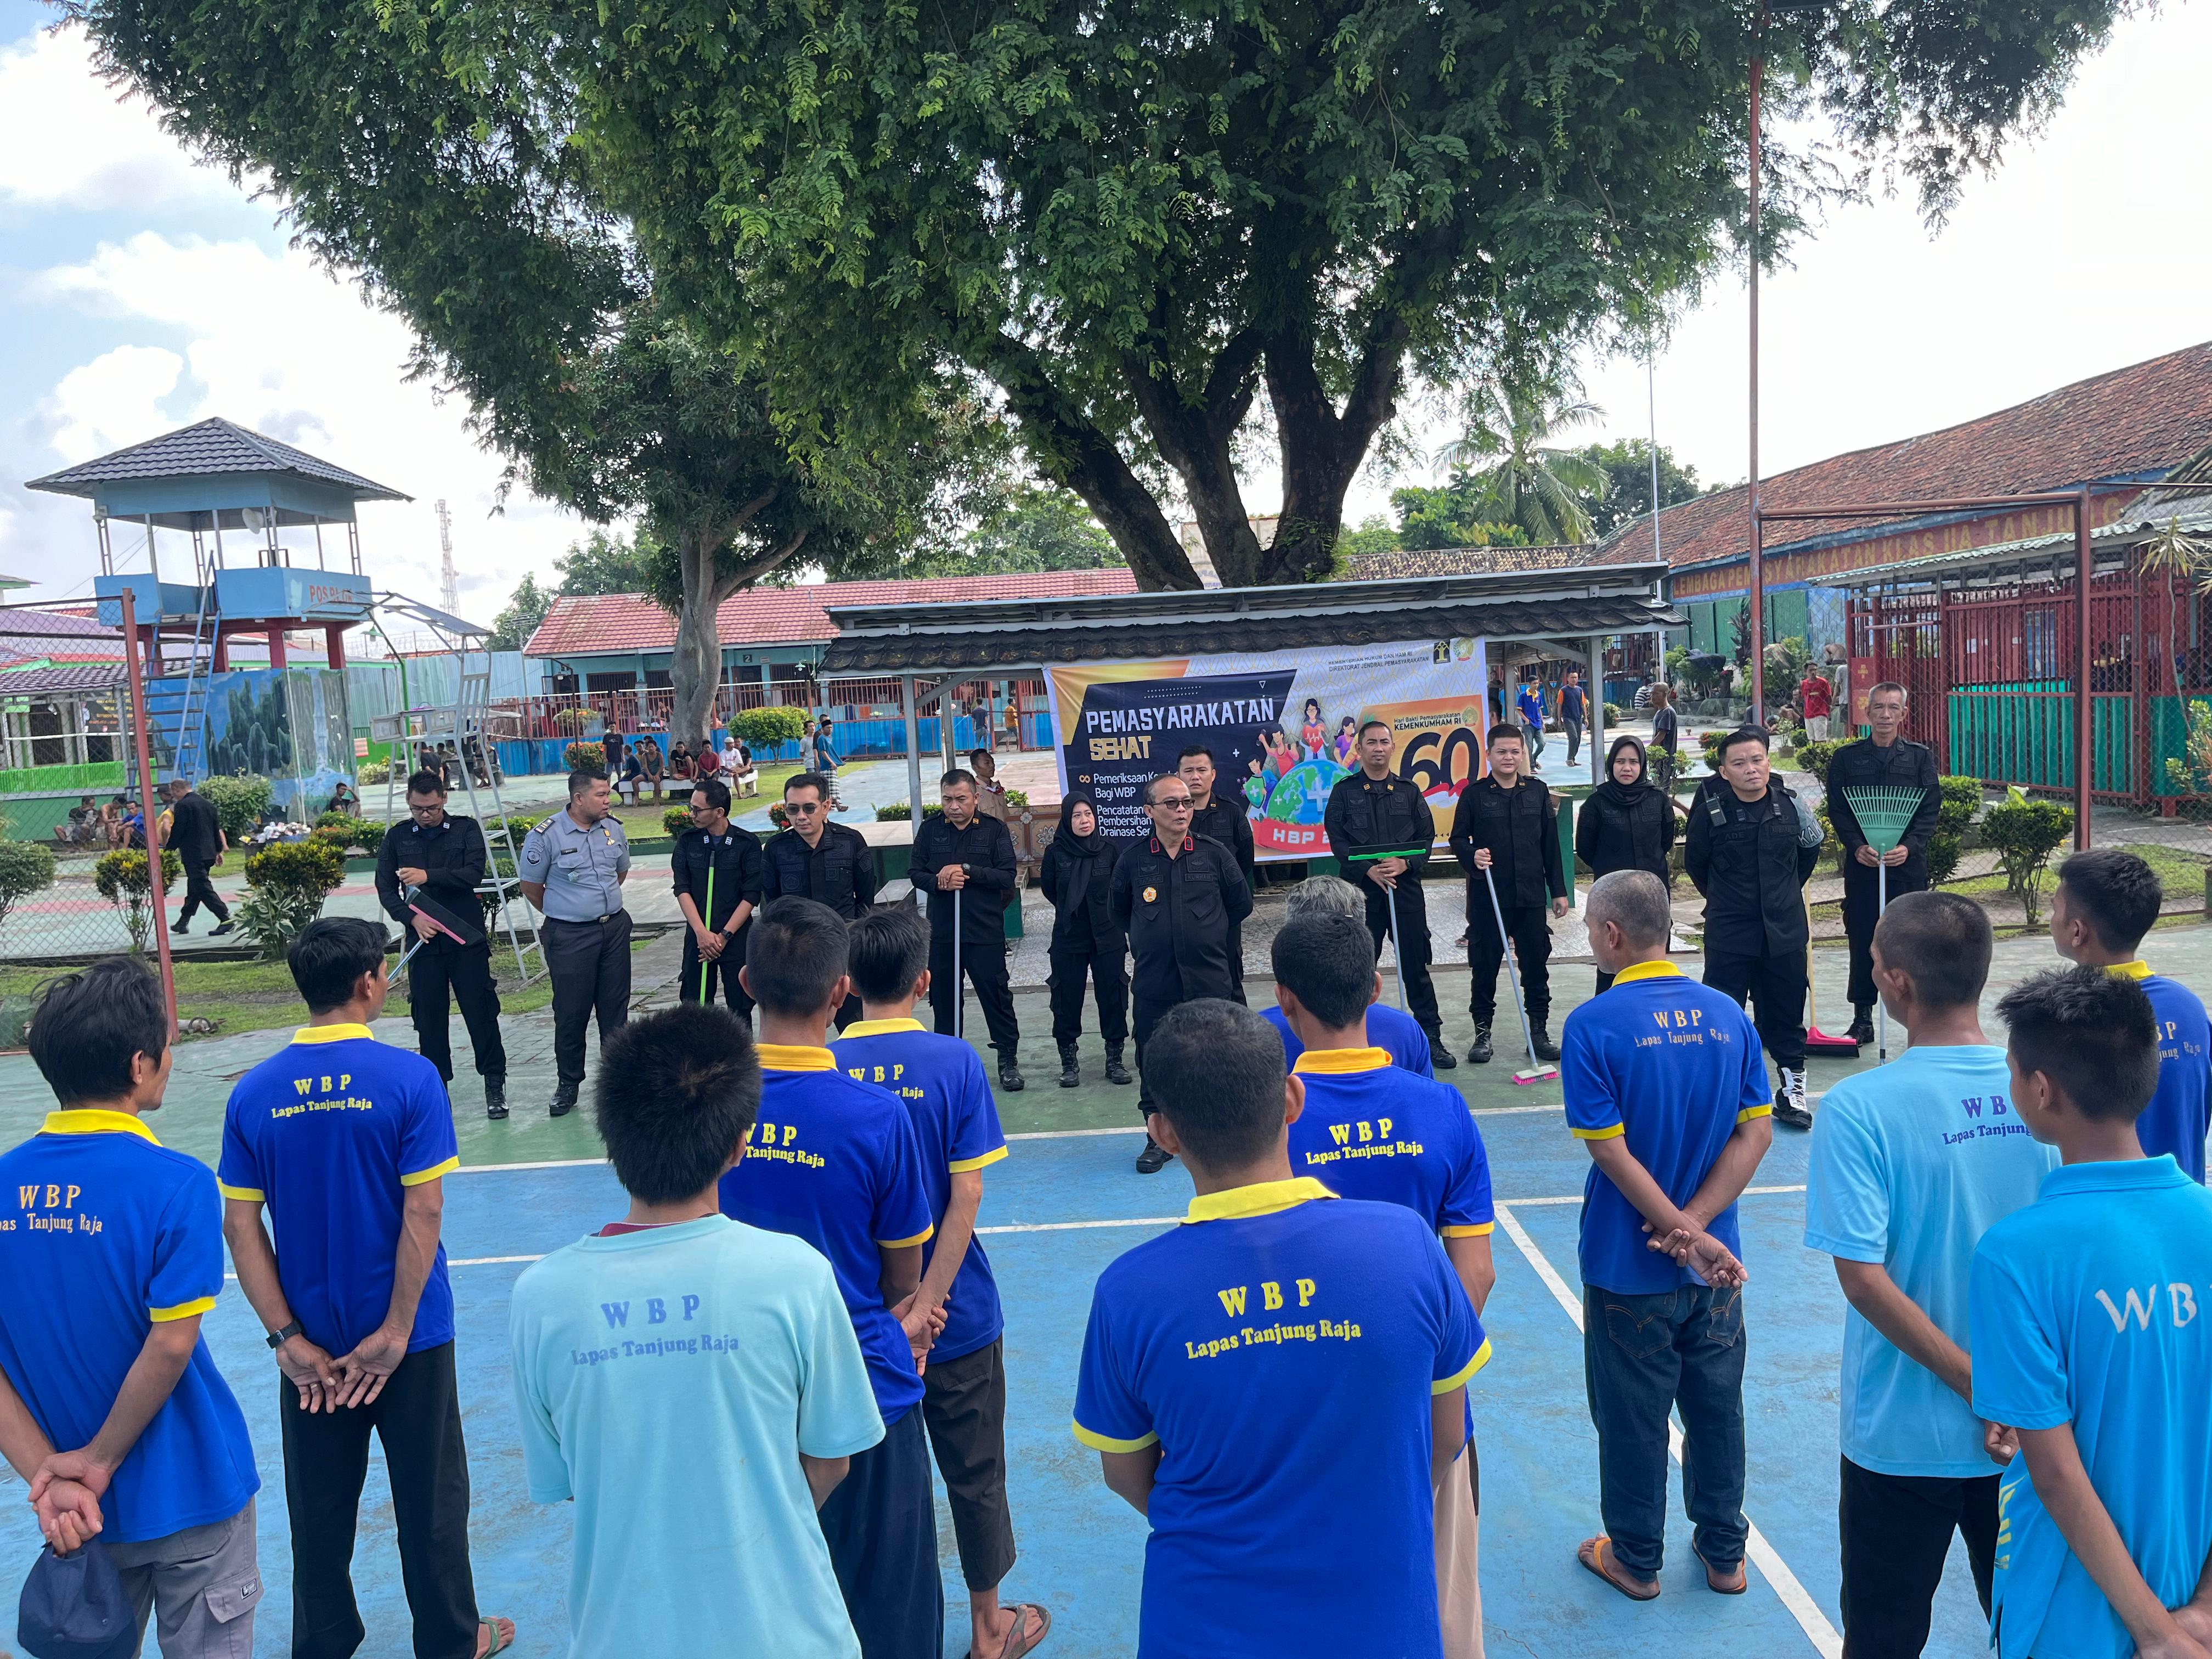 Lapas Tanjung Raja Semarak Peringati Hari Bhakti Pemasyarakatan ke-60 dengan Aksi Bersih-Bersih: Pegawai dan WBP Bersama Mewujudkan Lingkungan Sehat